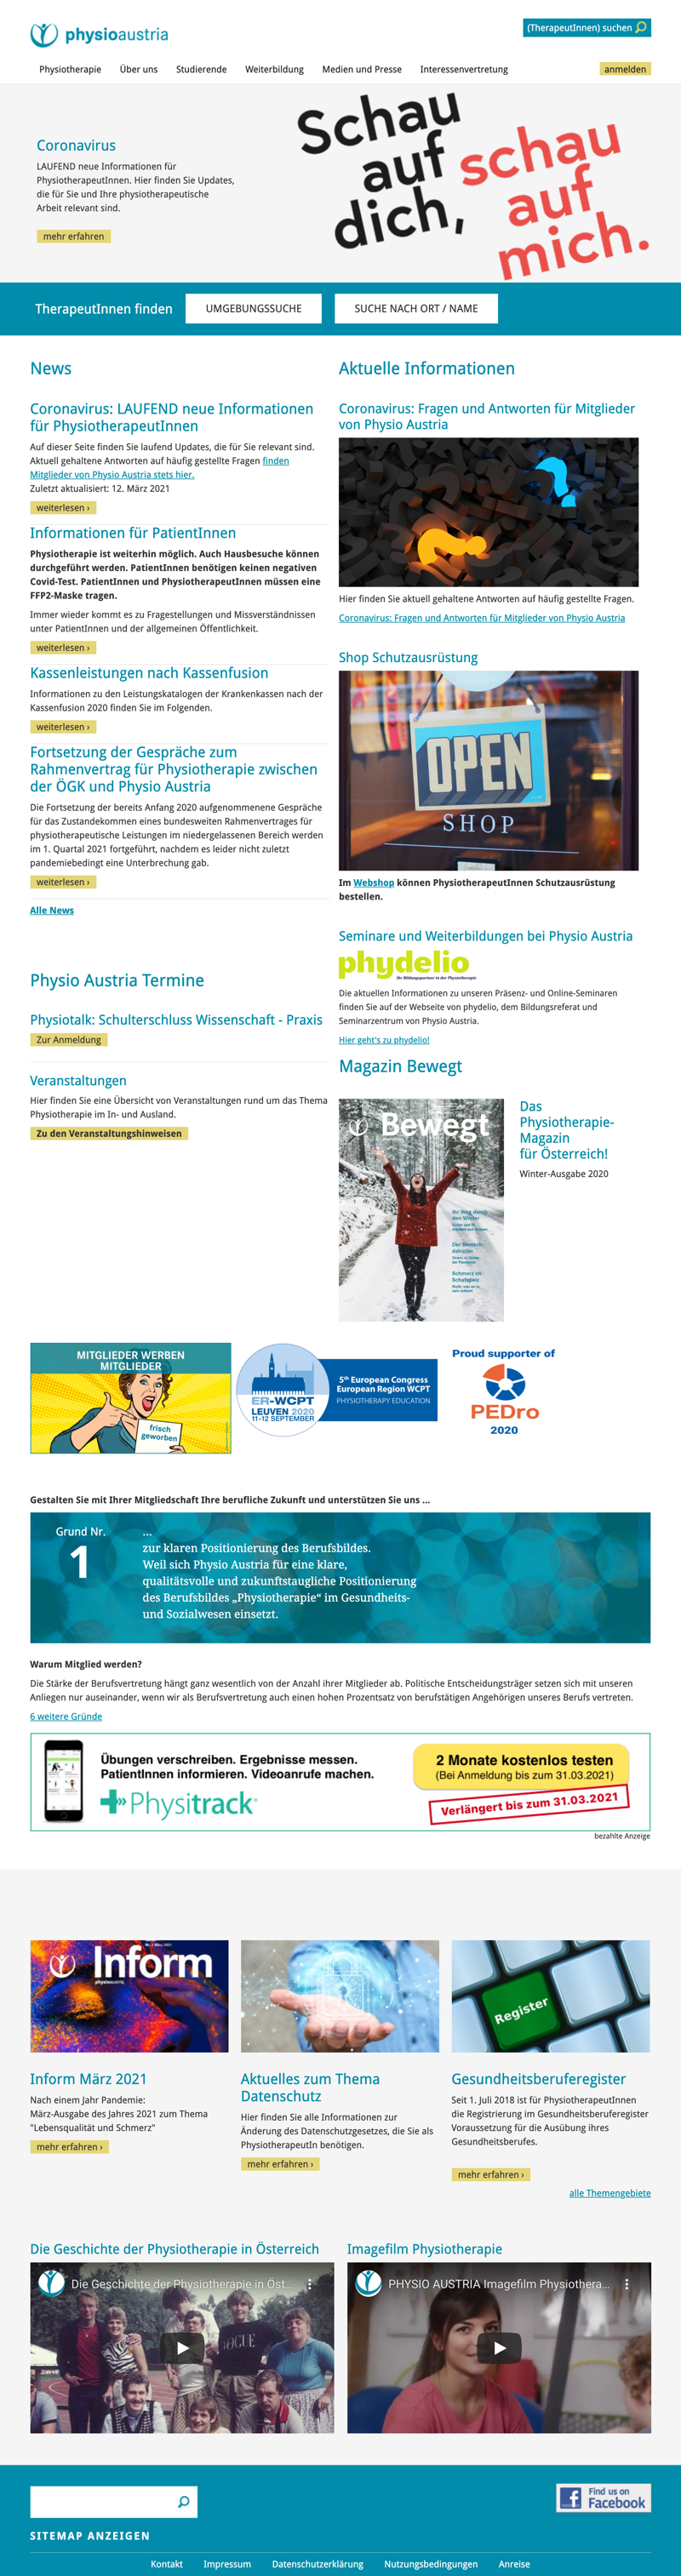 Screenshot Frontpage Physio Austria 03/21